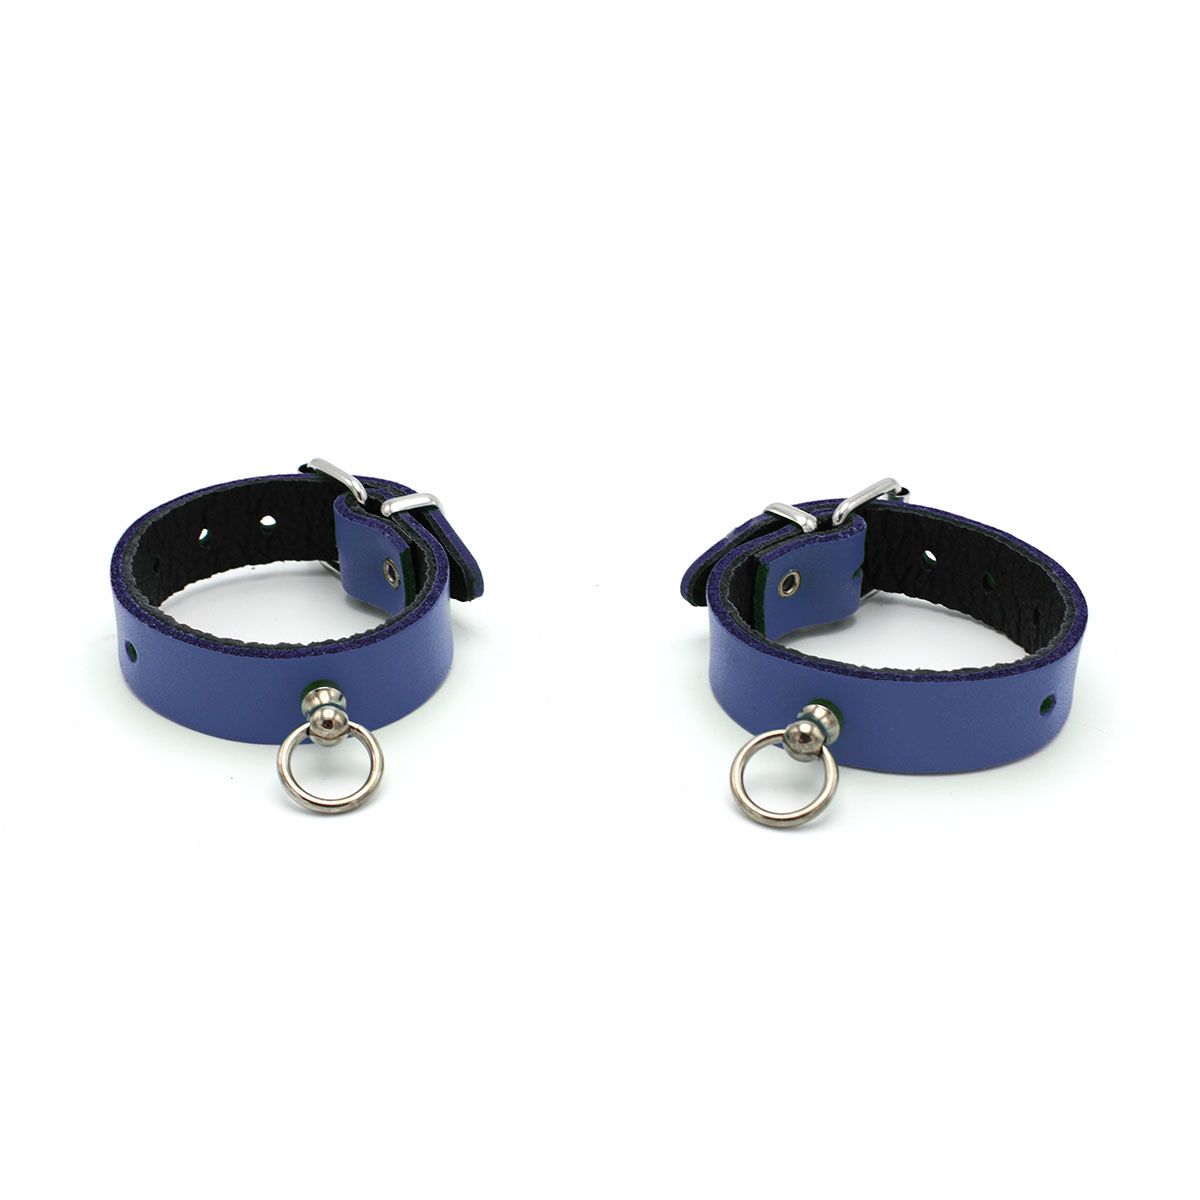 Kiotos Leather - Polsboeien Leder met Kleine O-ring - Blauw-Erotiekvoordeel.nl